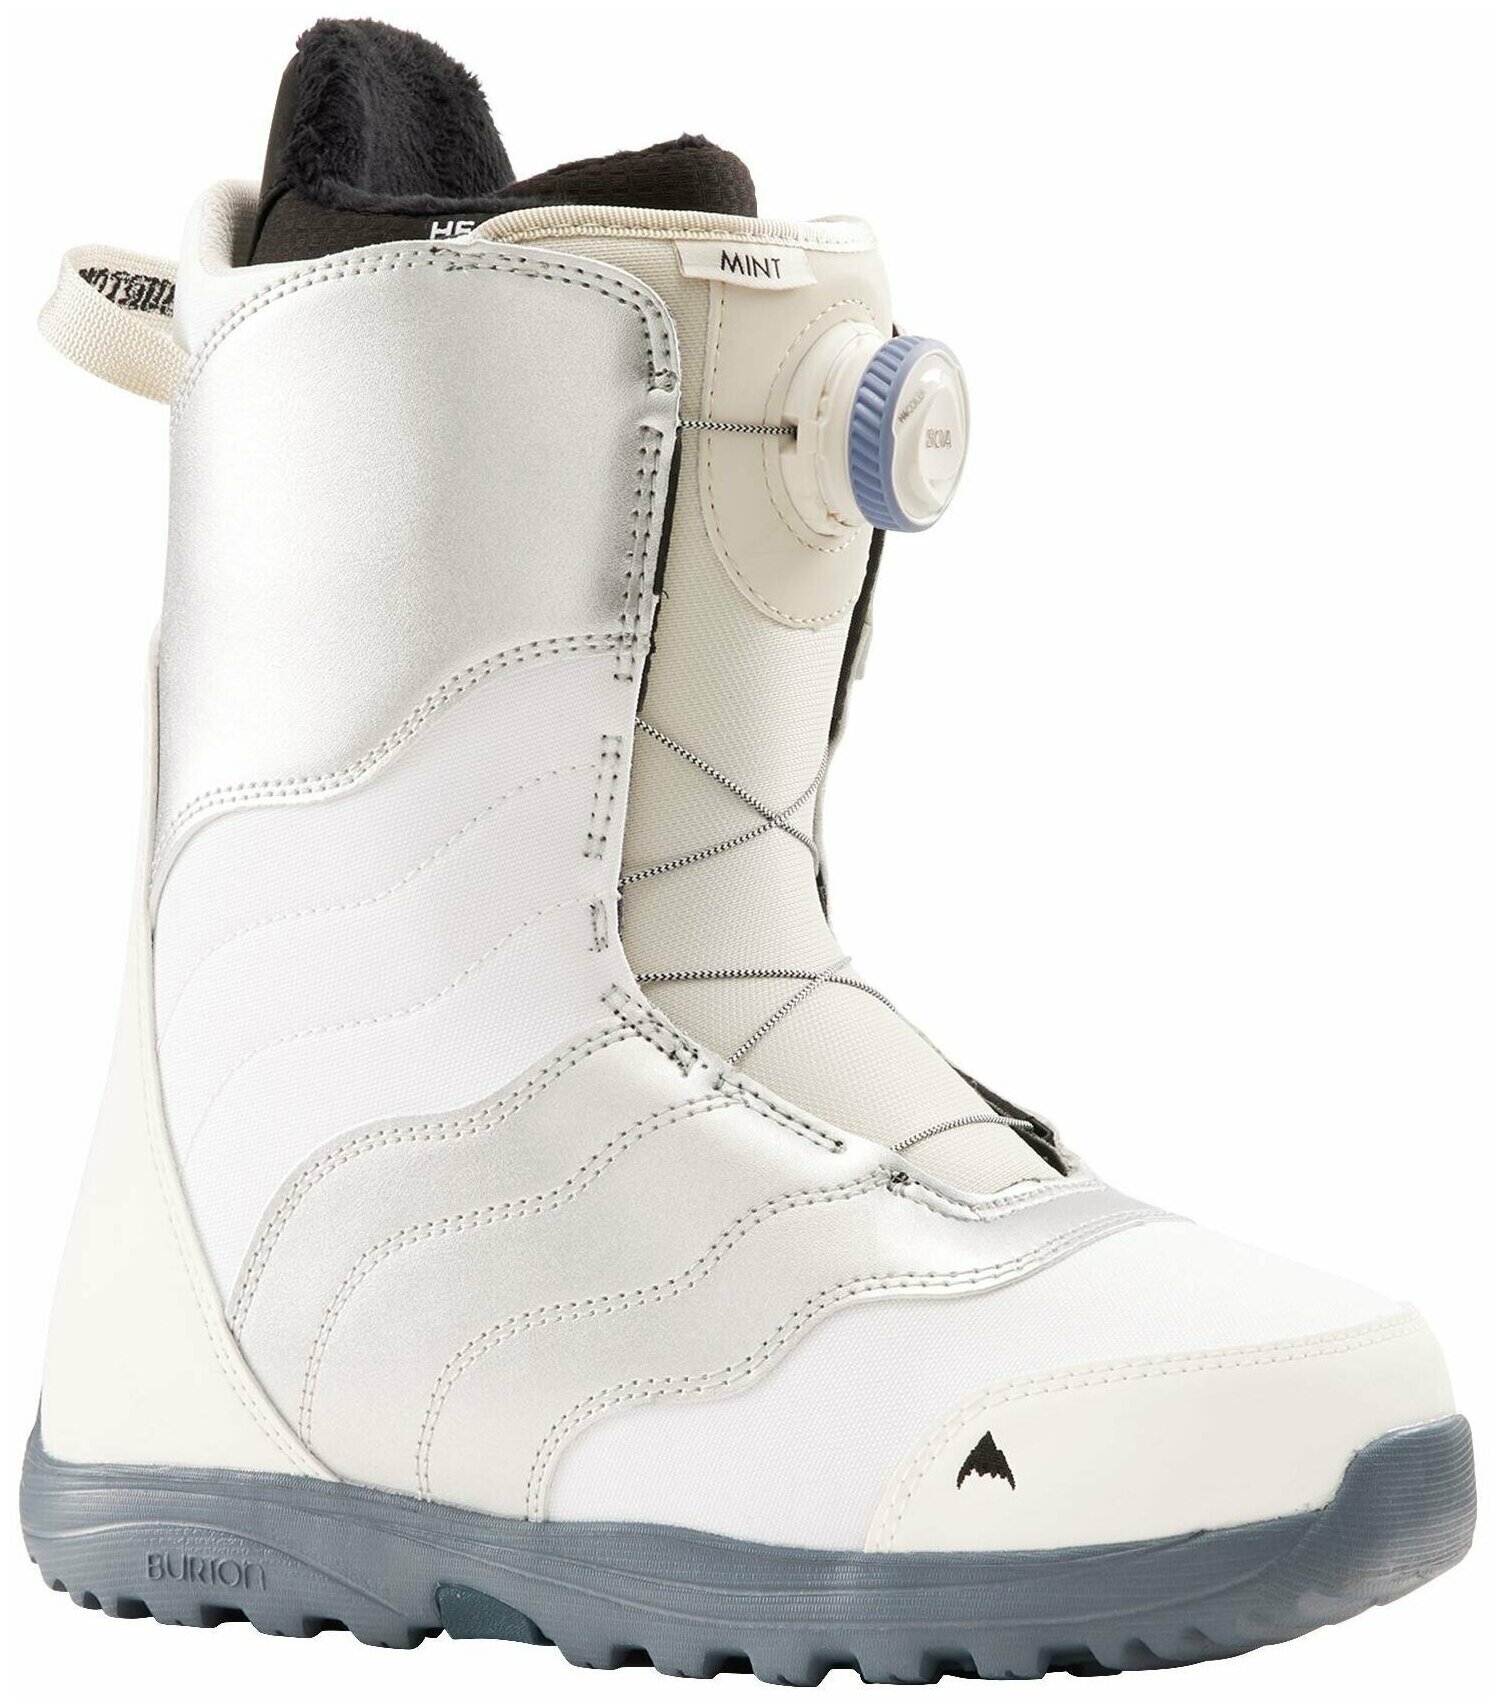 Ботинки для сноуборда BURTON 2021-22 Mint Boa White/Glitter (US:9)